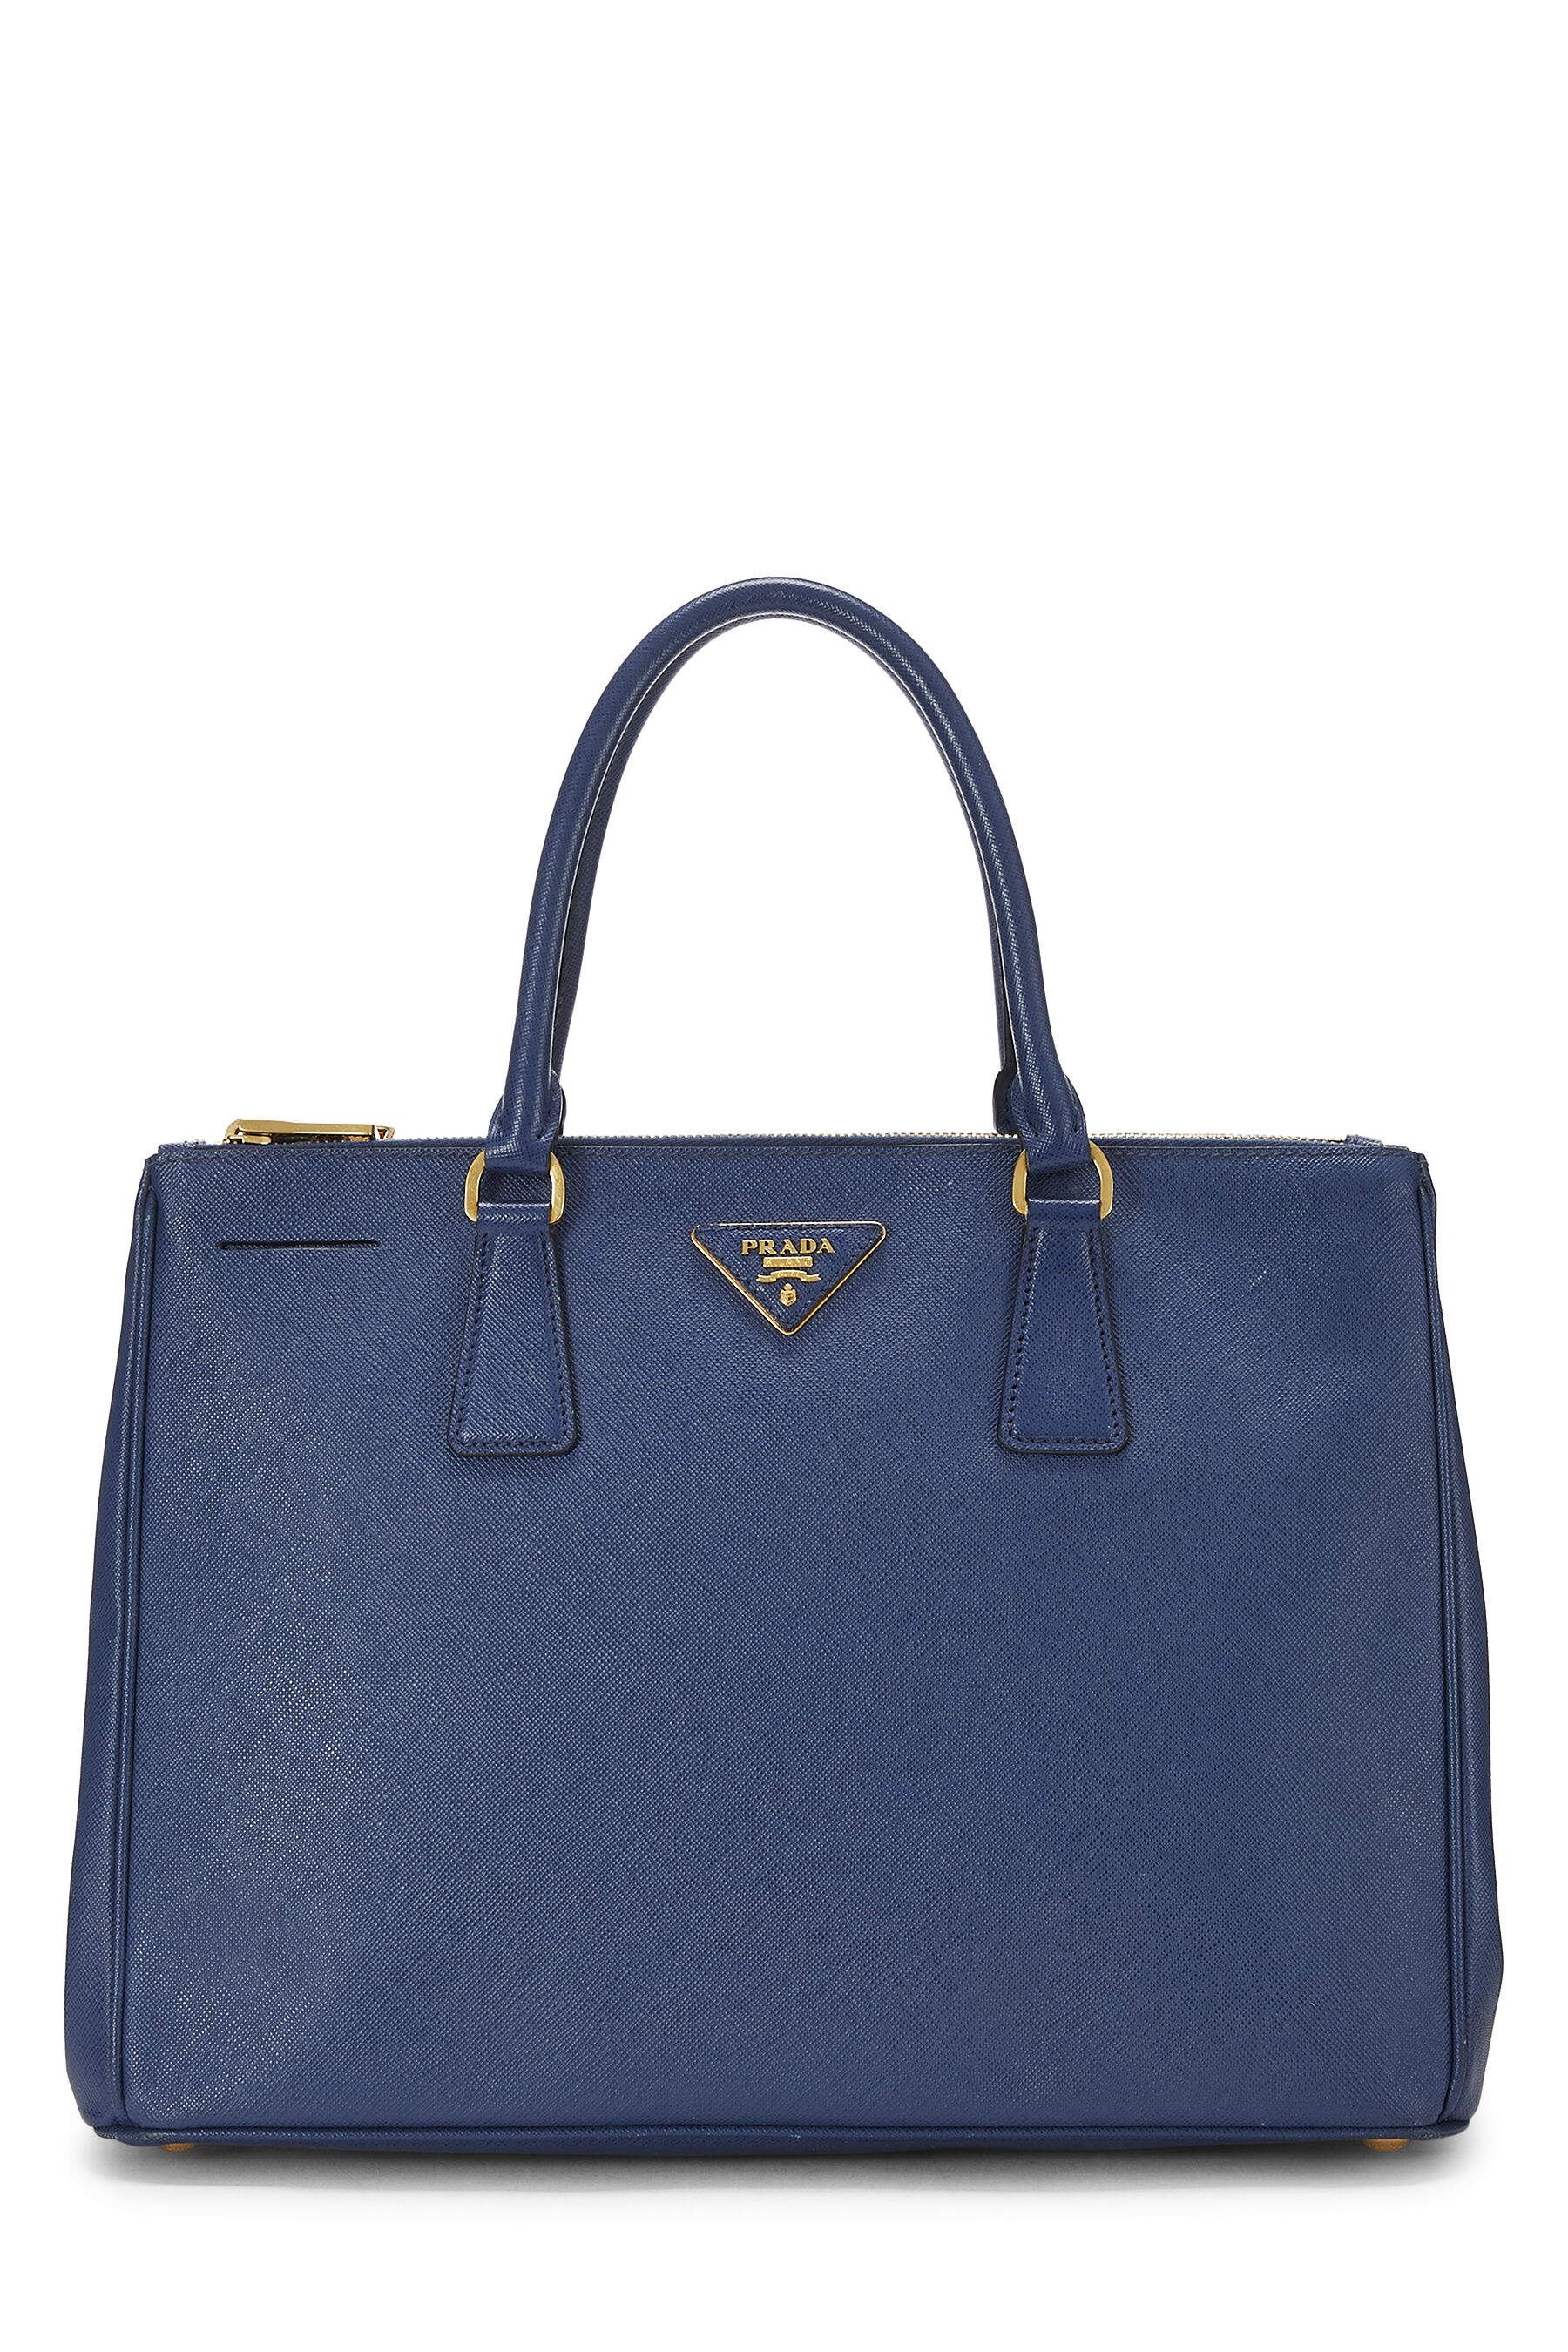 PRADA Lux Saffiano Leather Tote Shoulder Bag Blue